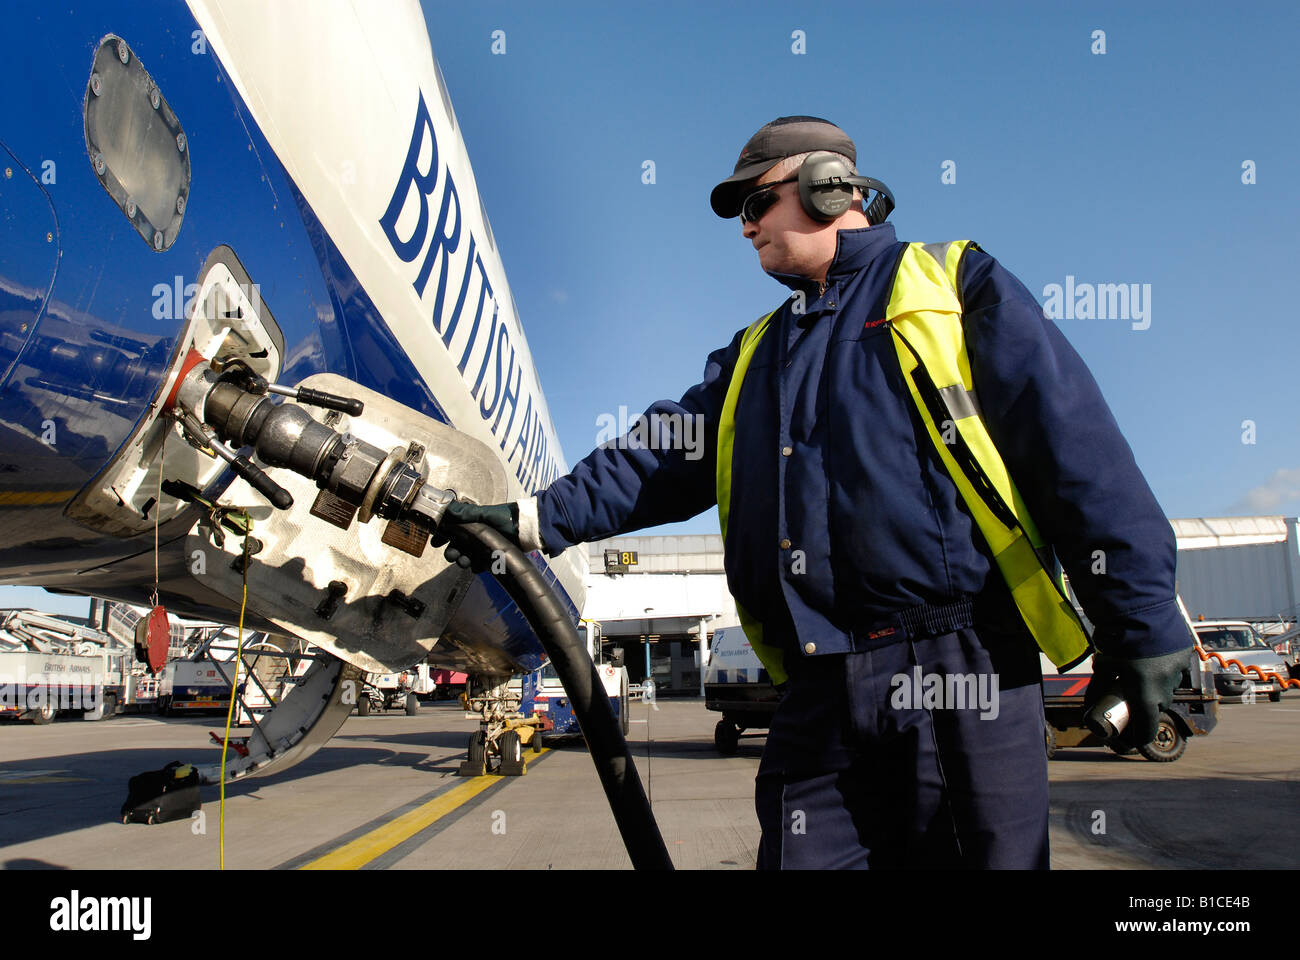 Technician refuelling aircraft Stock Photo